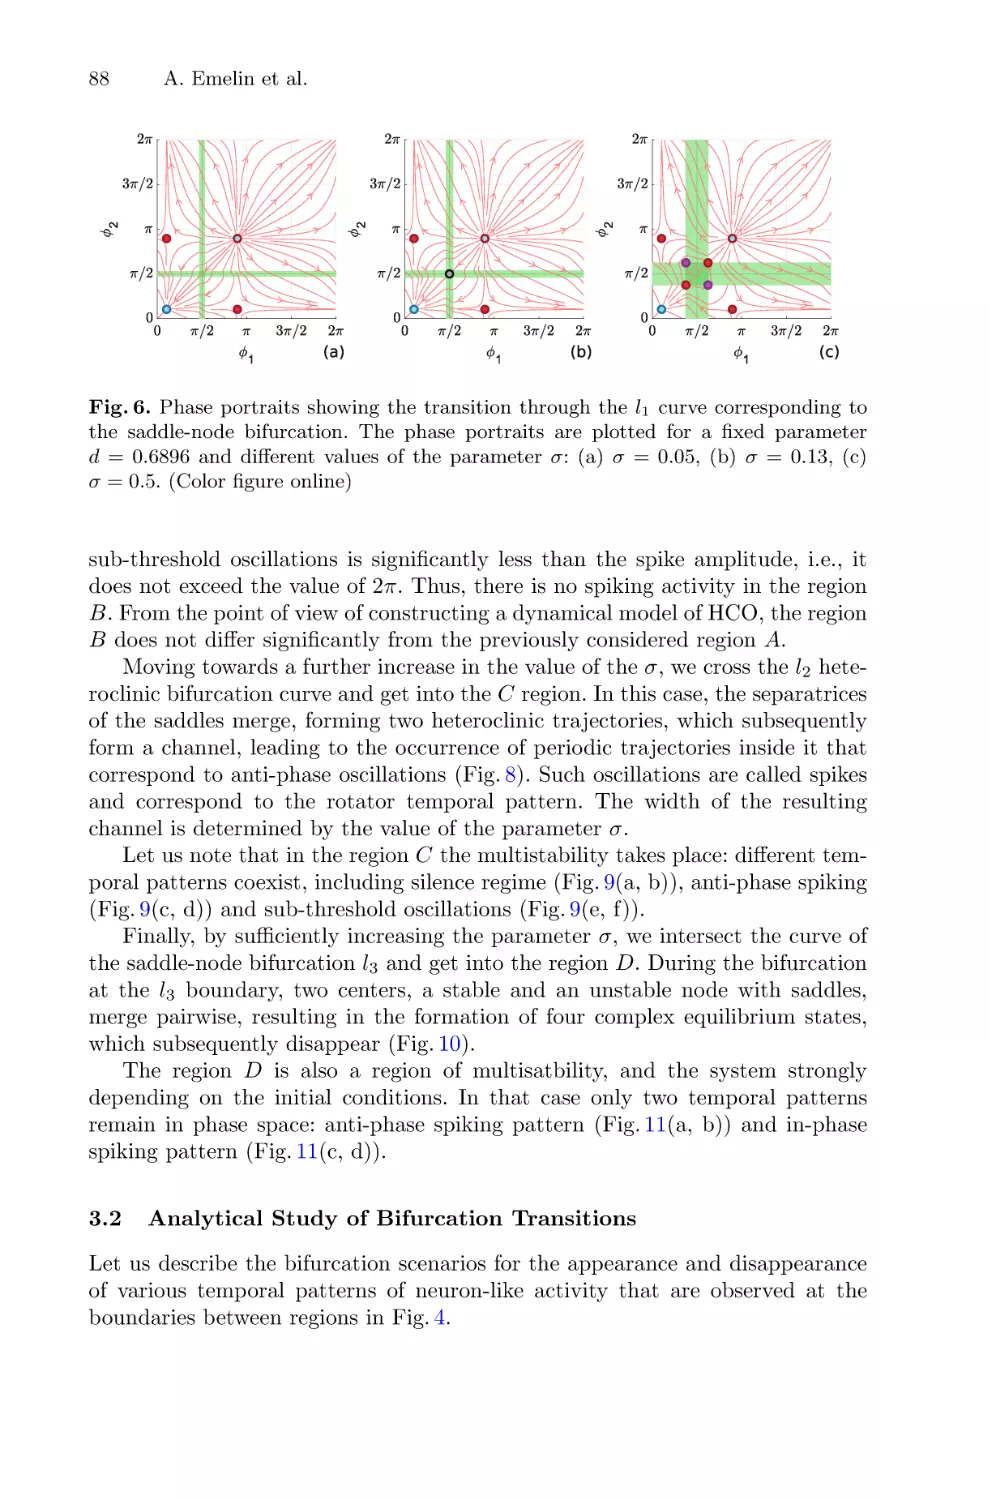 3.2 Analytical Study of Bifurcation Transitions